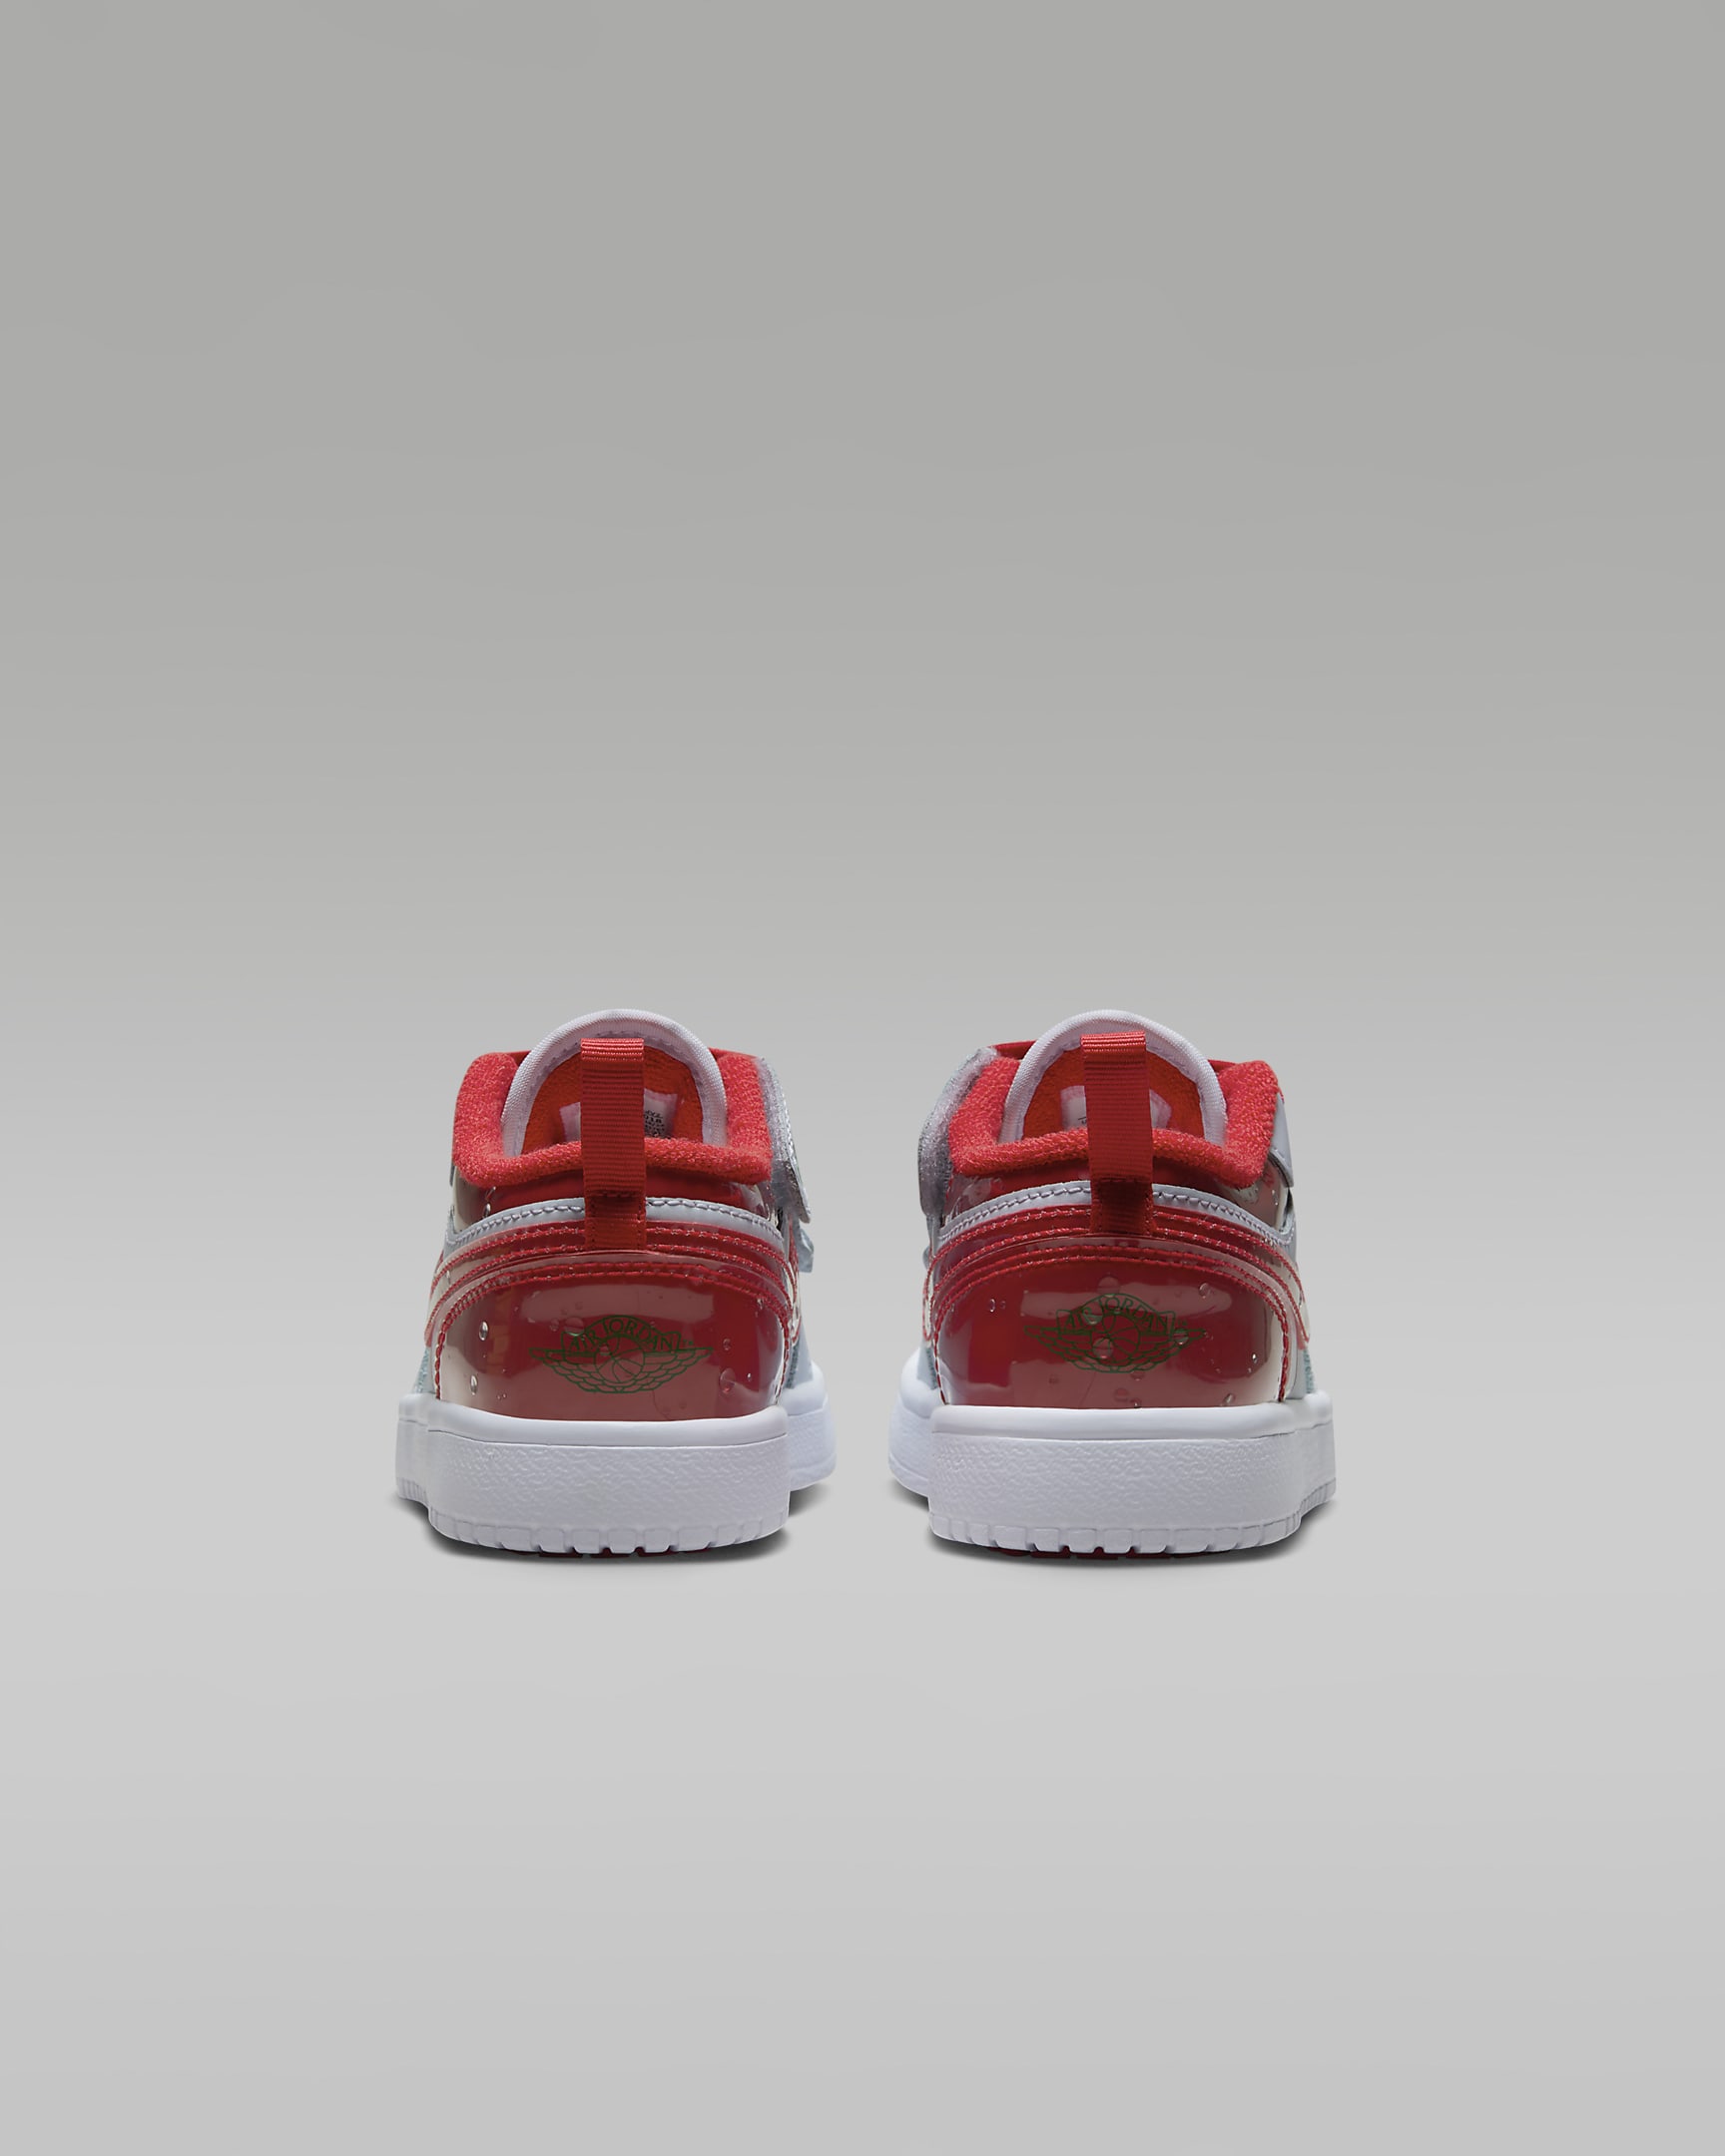 Jordan 1 Low Alt SE Little Kids' Shoes - Football Grey/Pine Green/White/University Red